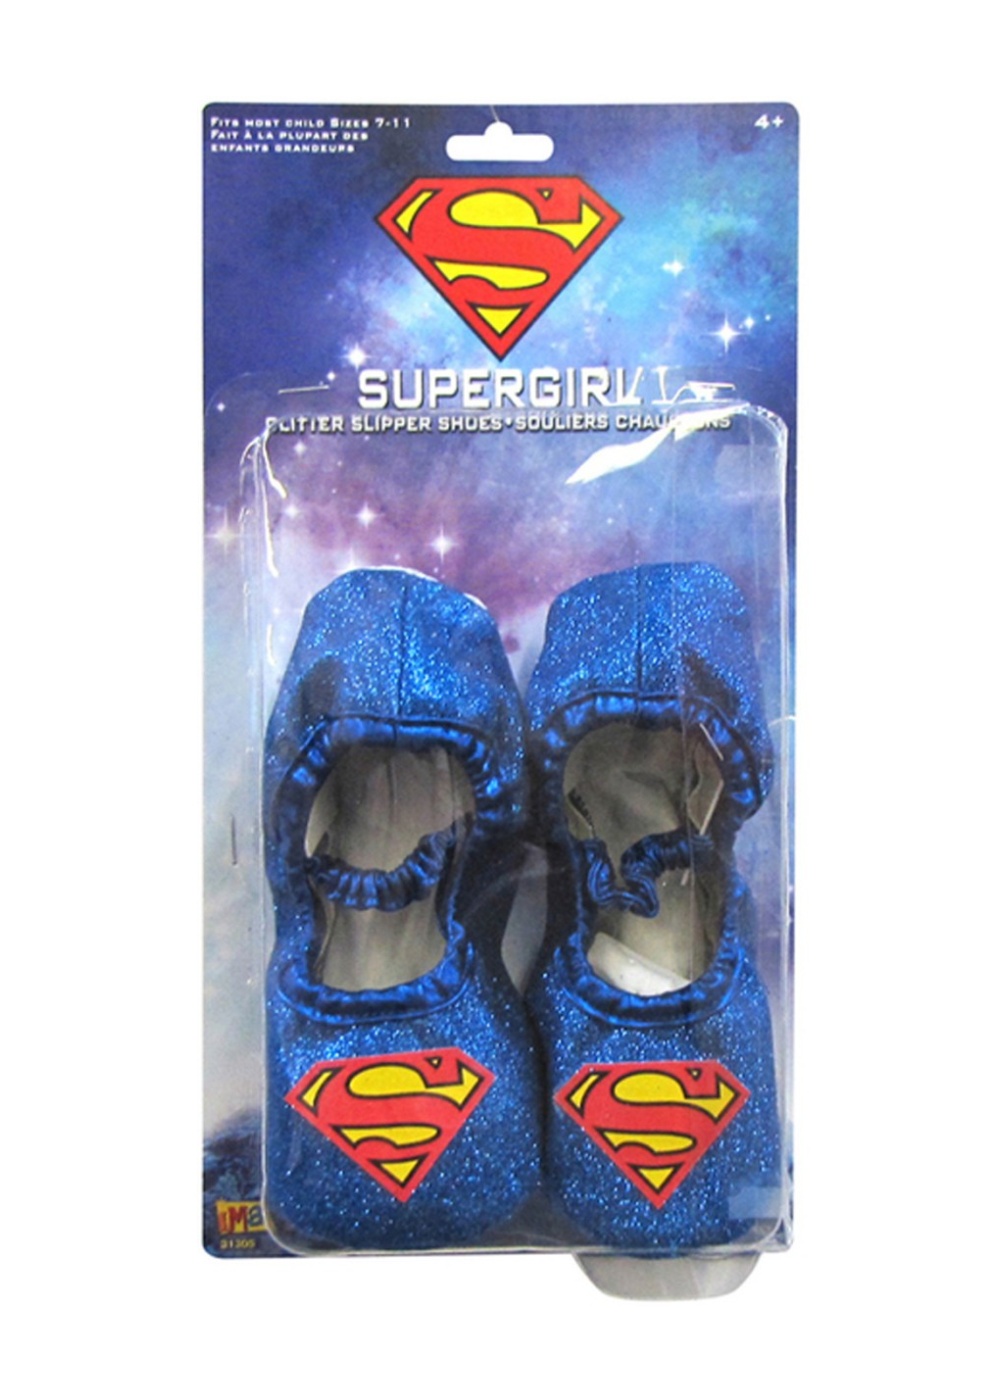  Girls Super Slipper Shoes